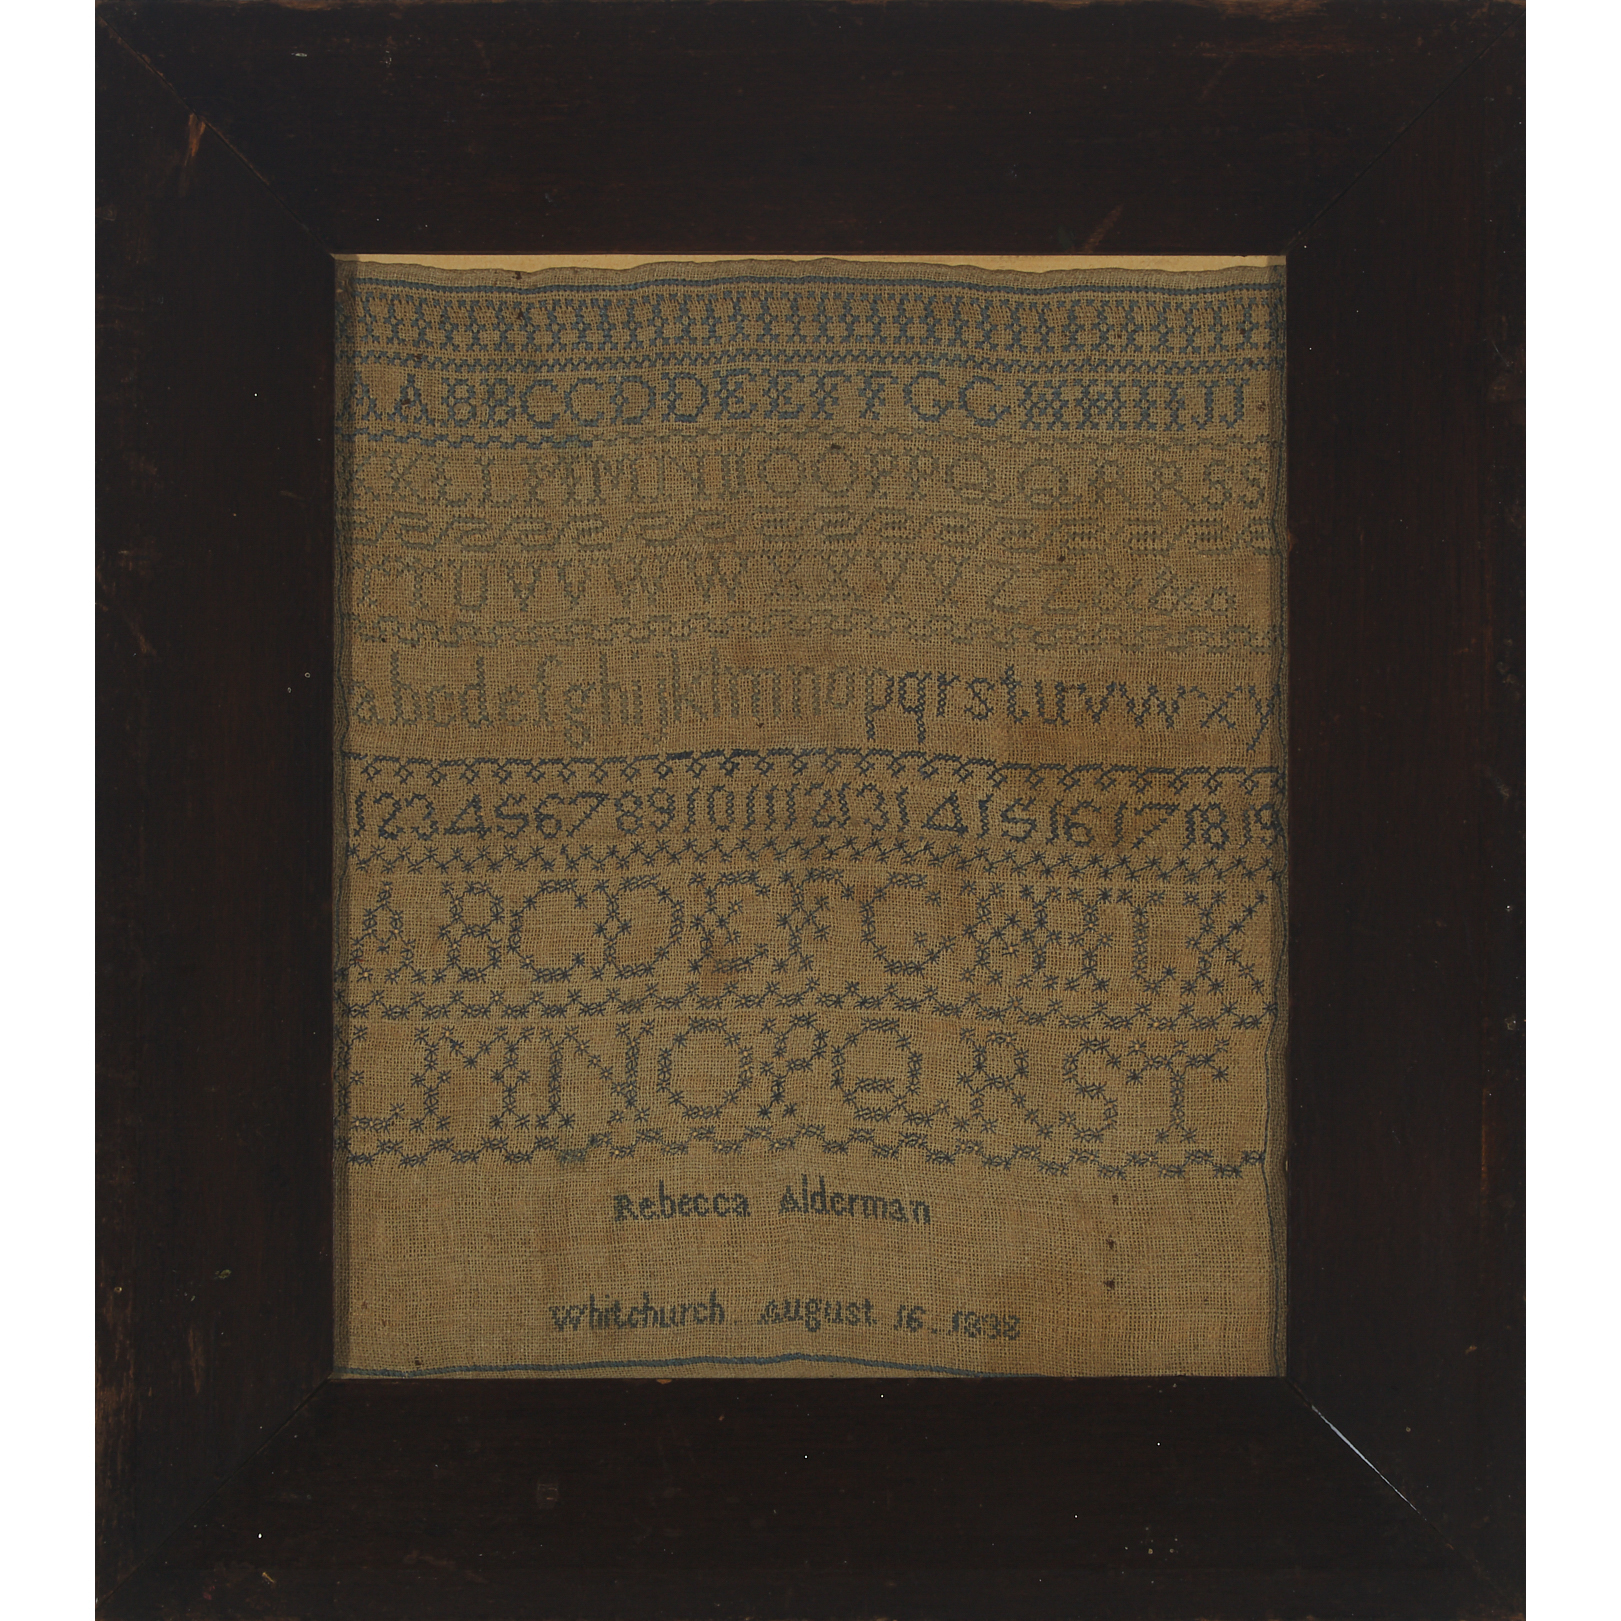 Ontario Alphabet Sampler, Rebecca Alderman, Whitchurch, August 16, 1838